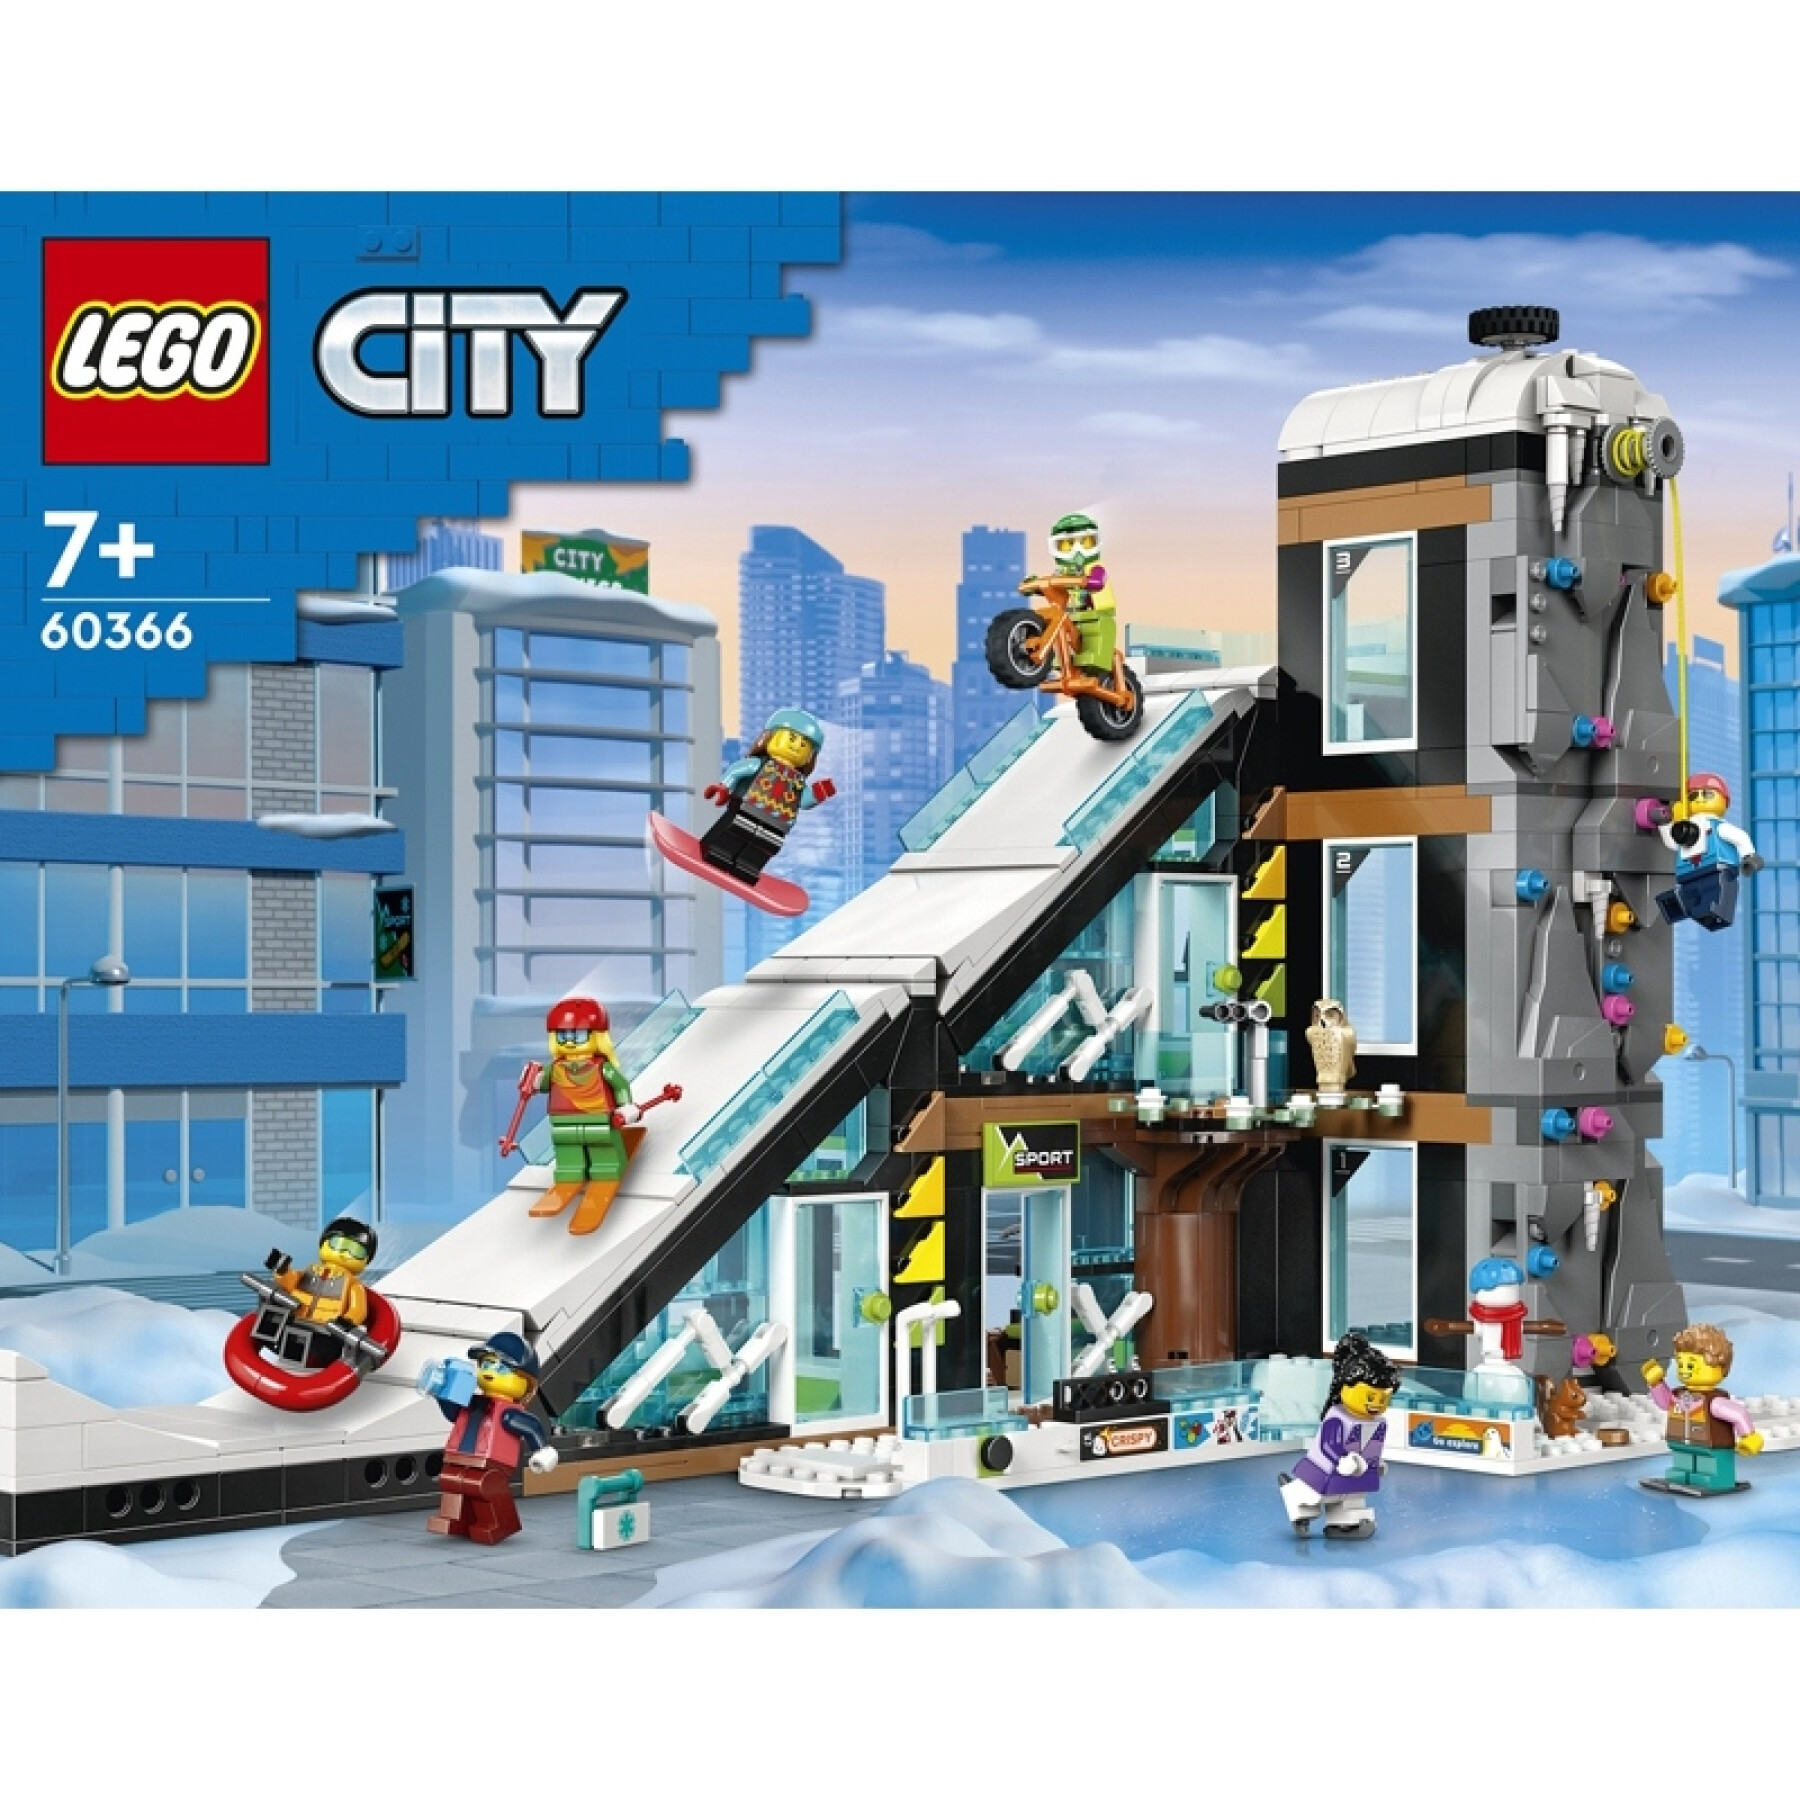 Construction games, ski and climbing complex Lego City